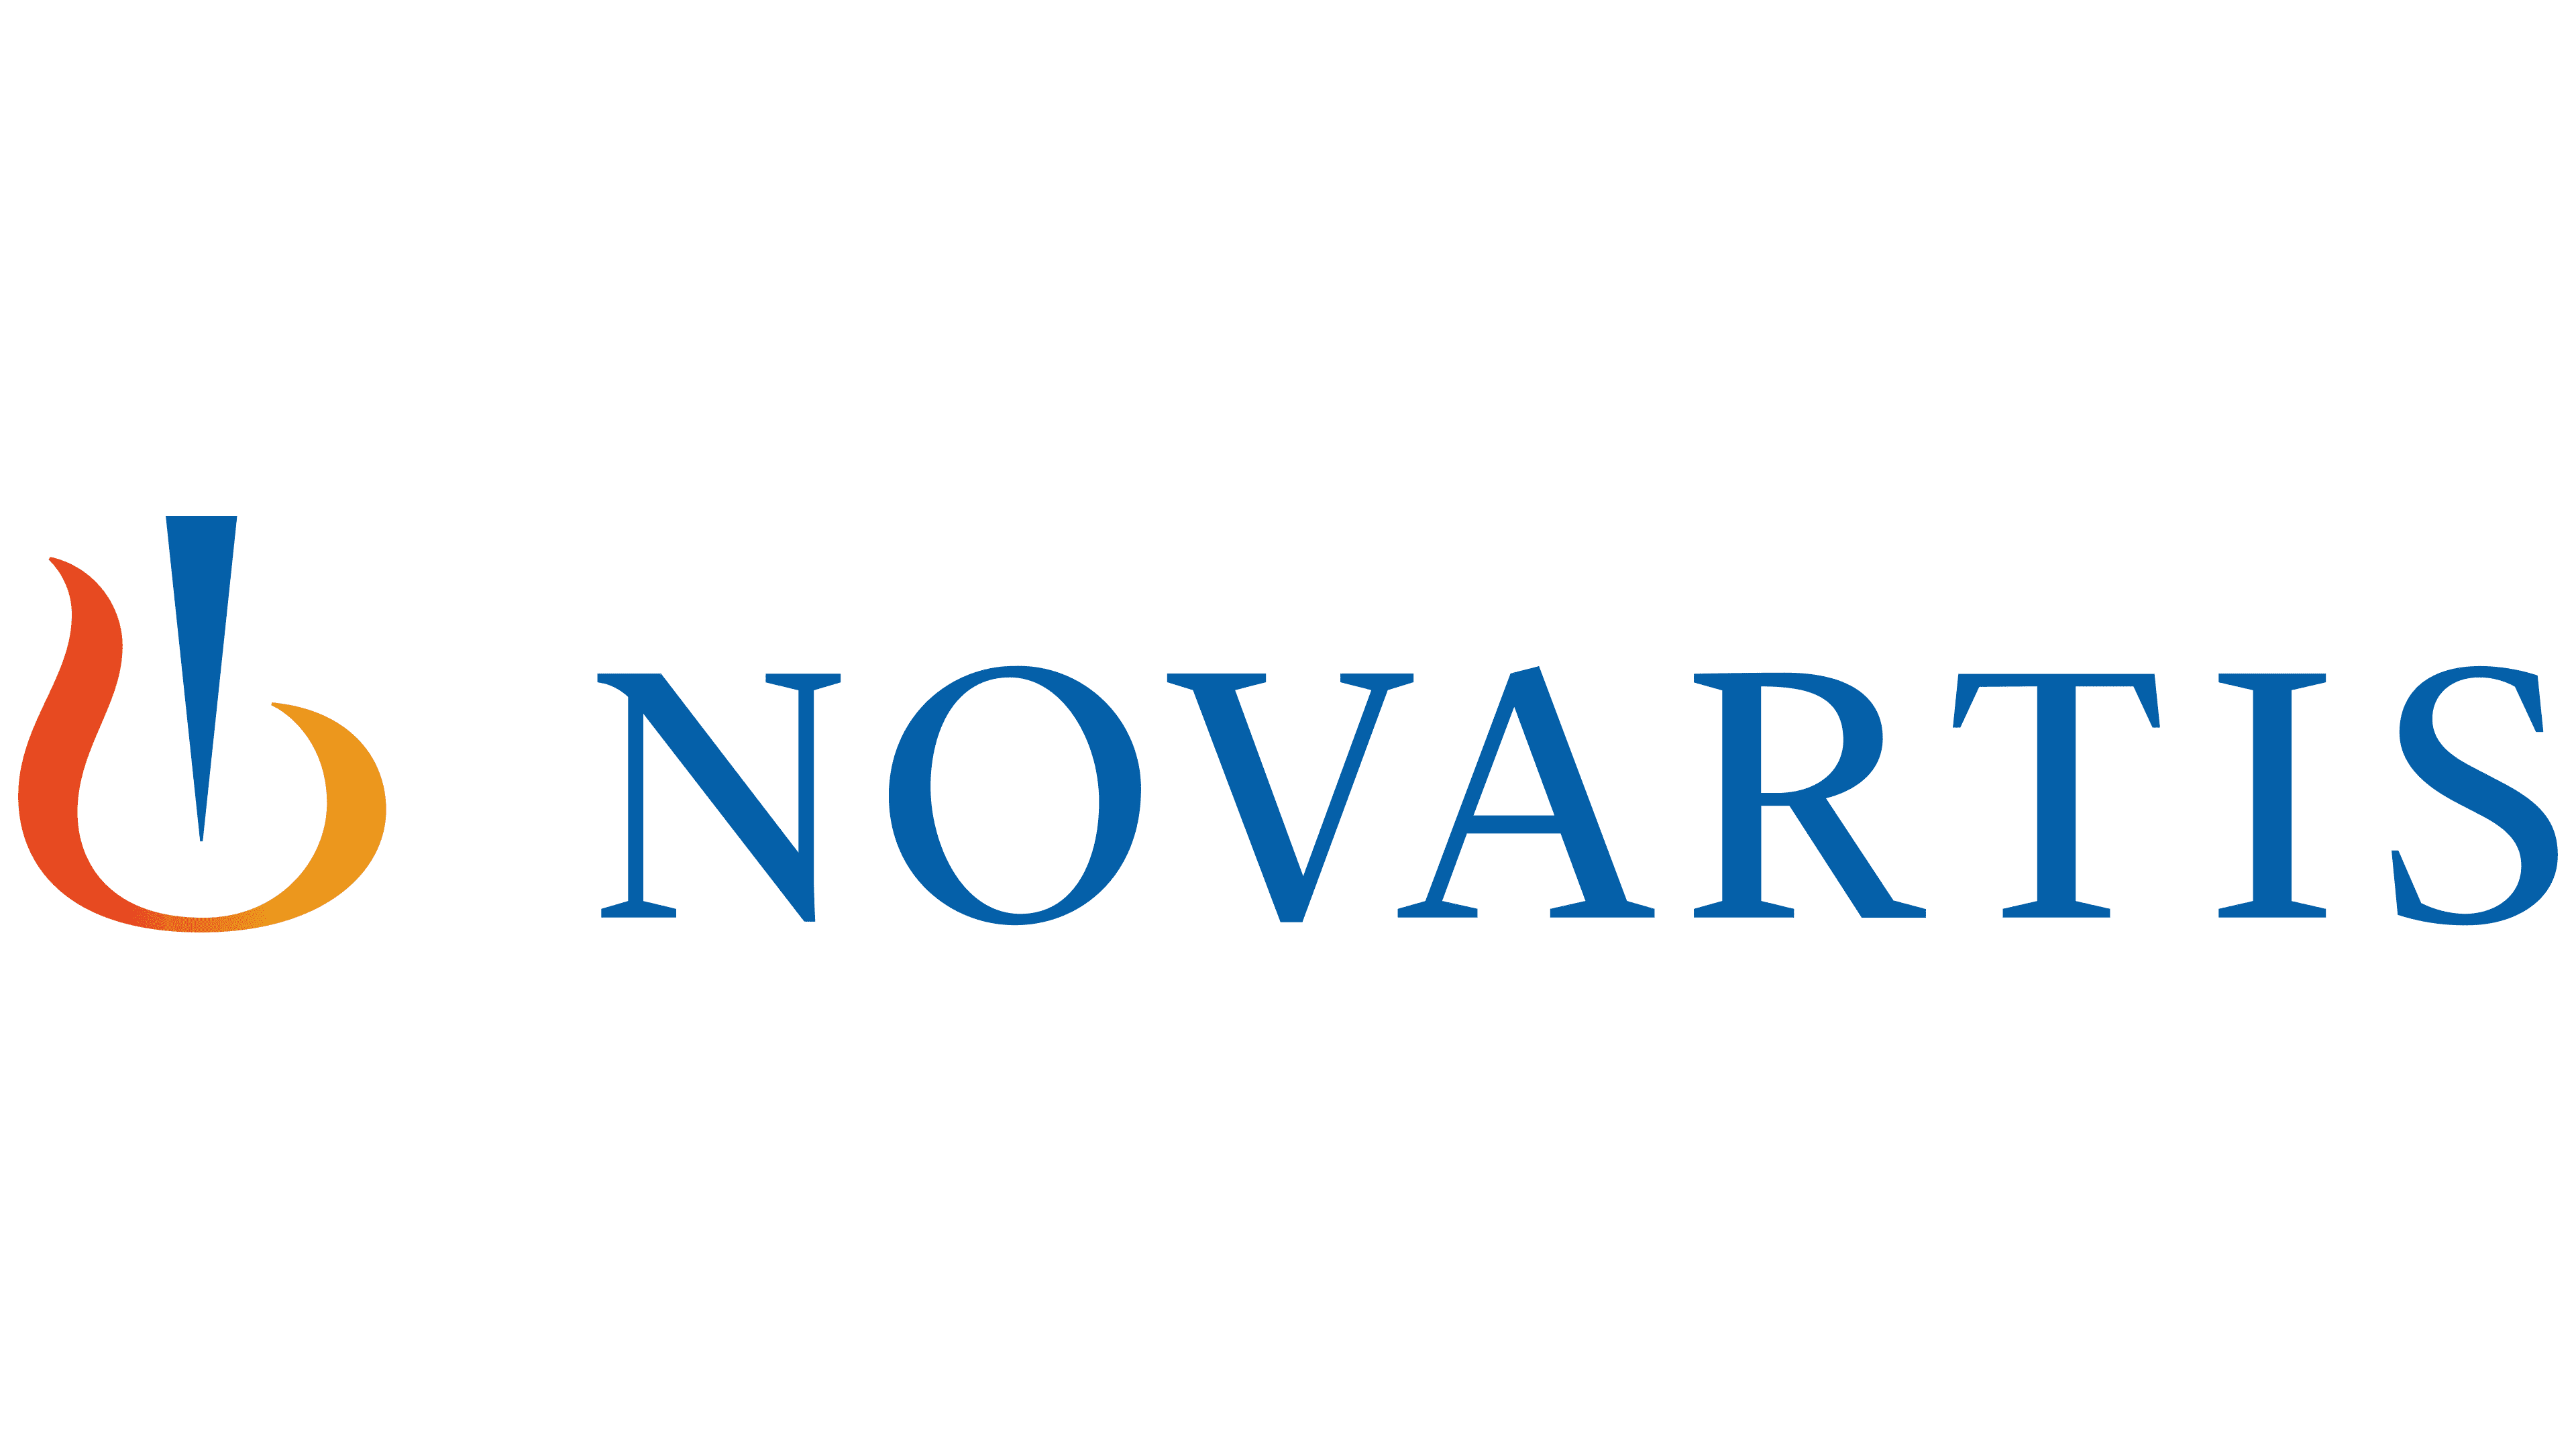 Novartis-Logo